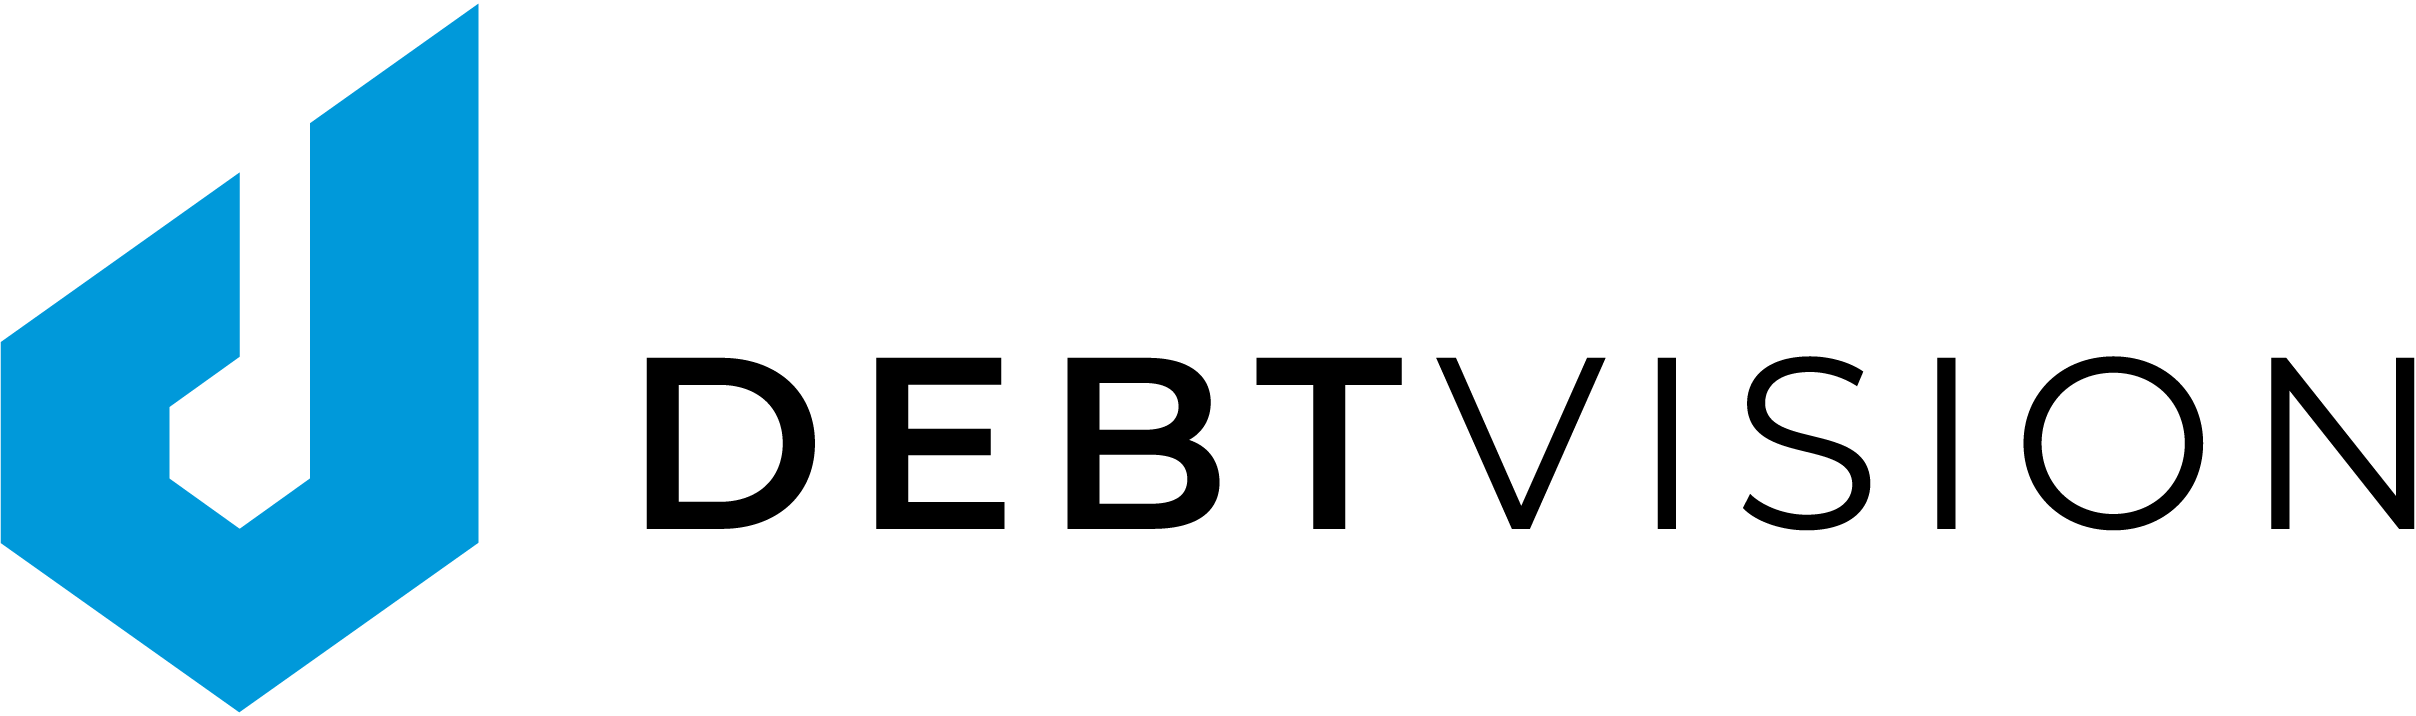 Logo Publsiher DEBTVISION Plattform – Programmfreigabe nach OPDV 01/2015